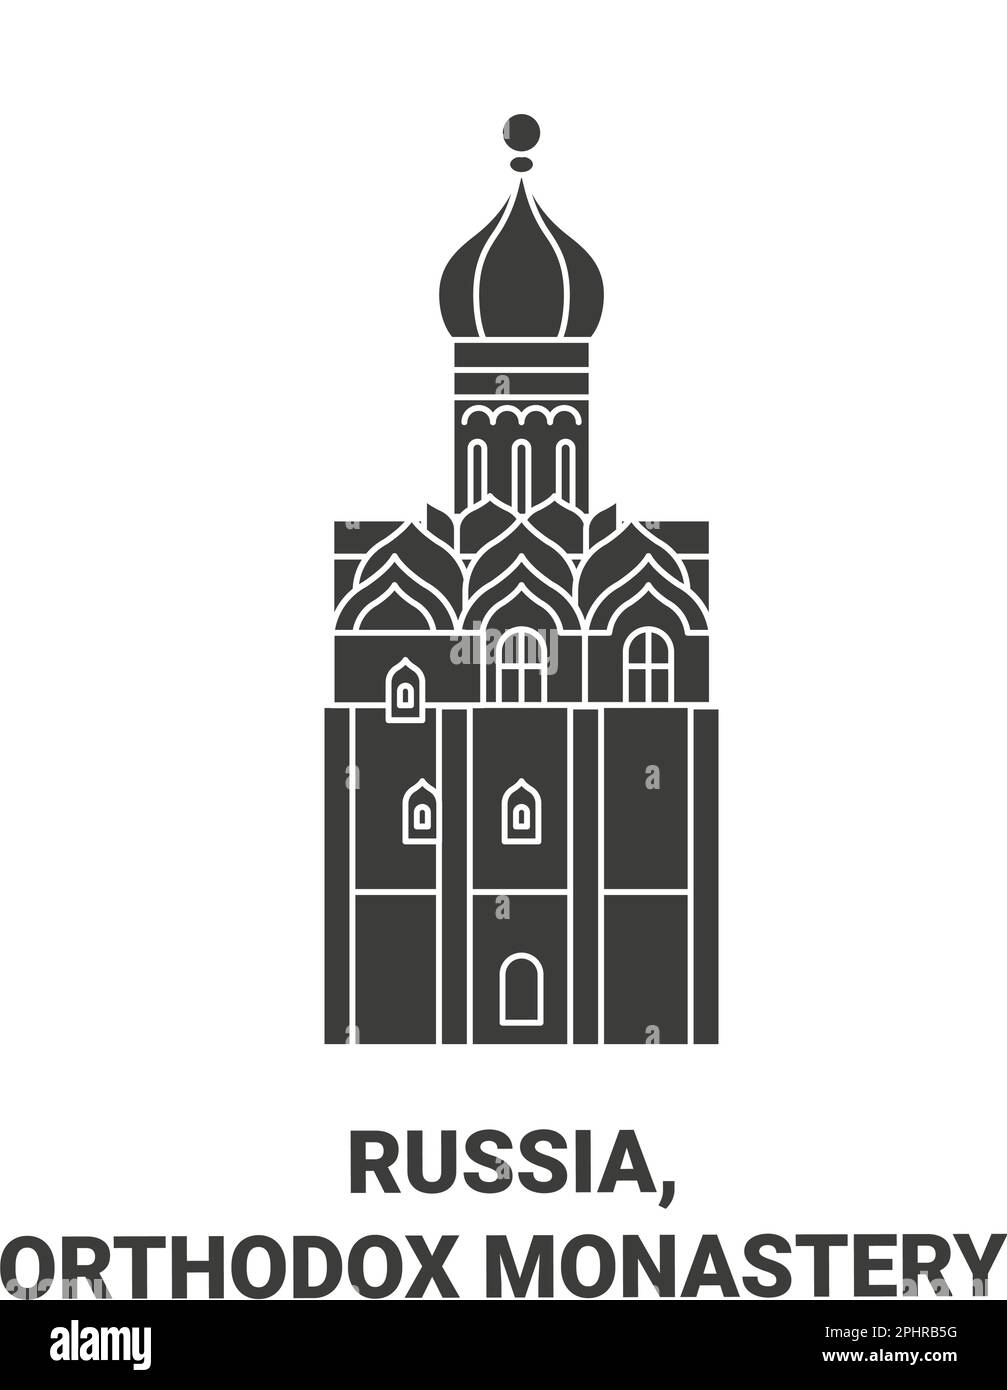 Russia, Orthodox Monastery travel landmark vector illustration Stock Vector